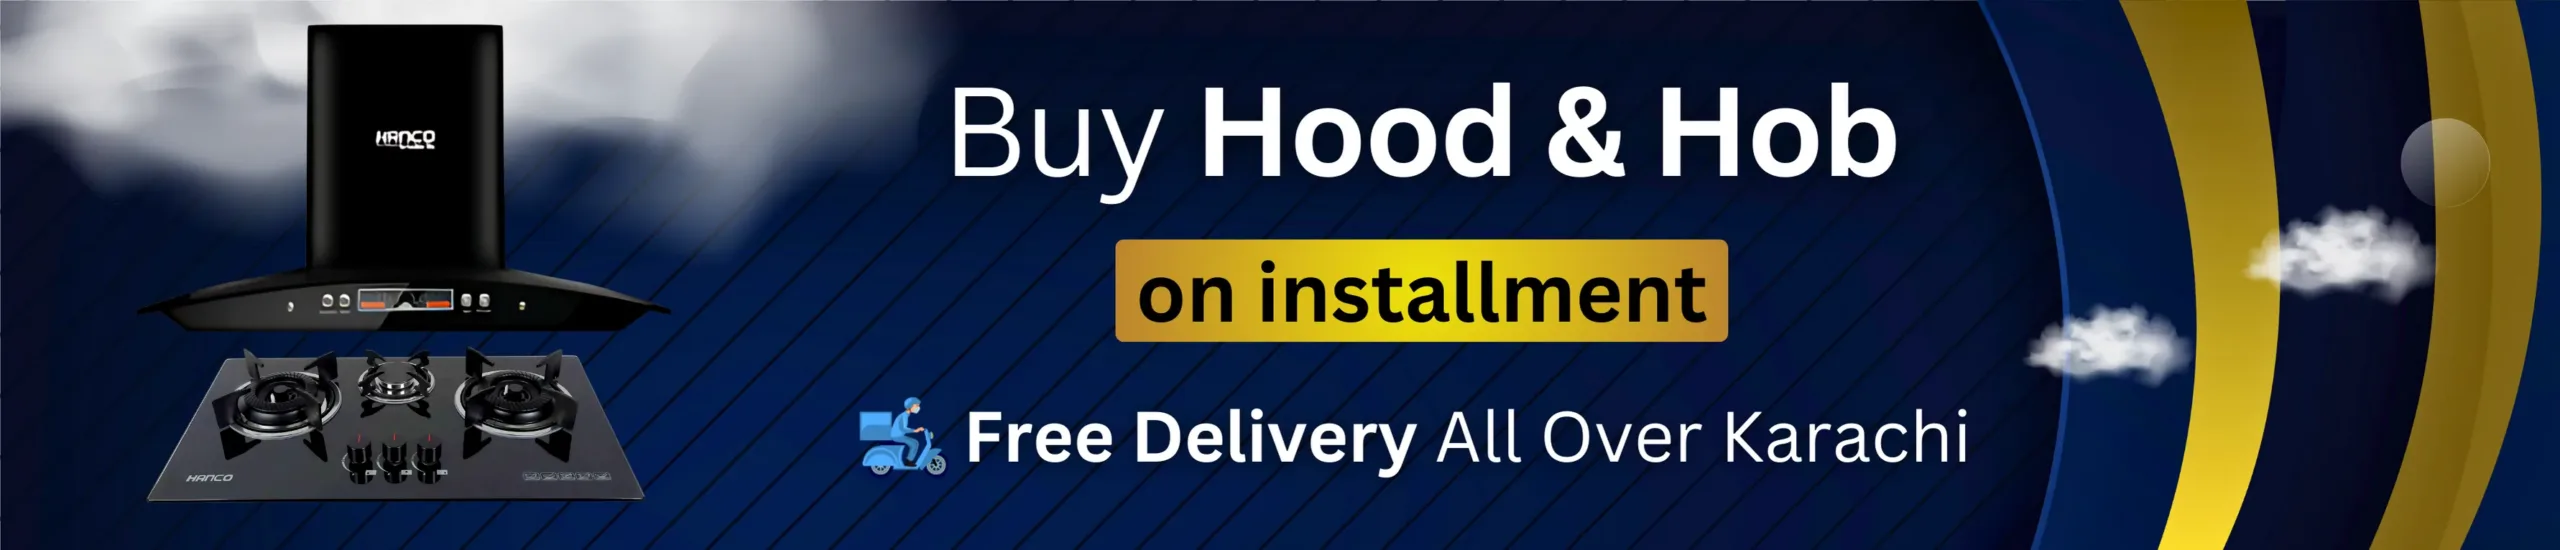 Hood & Hob on Installments